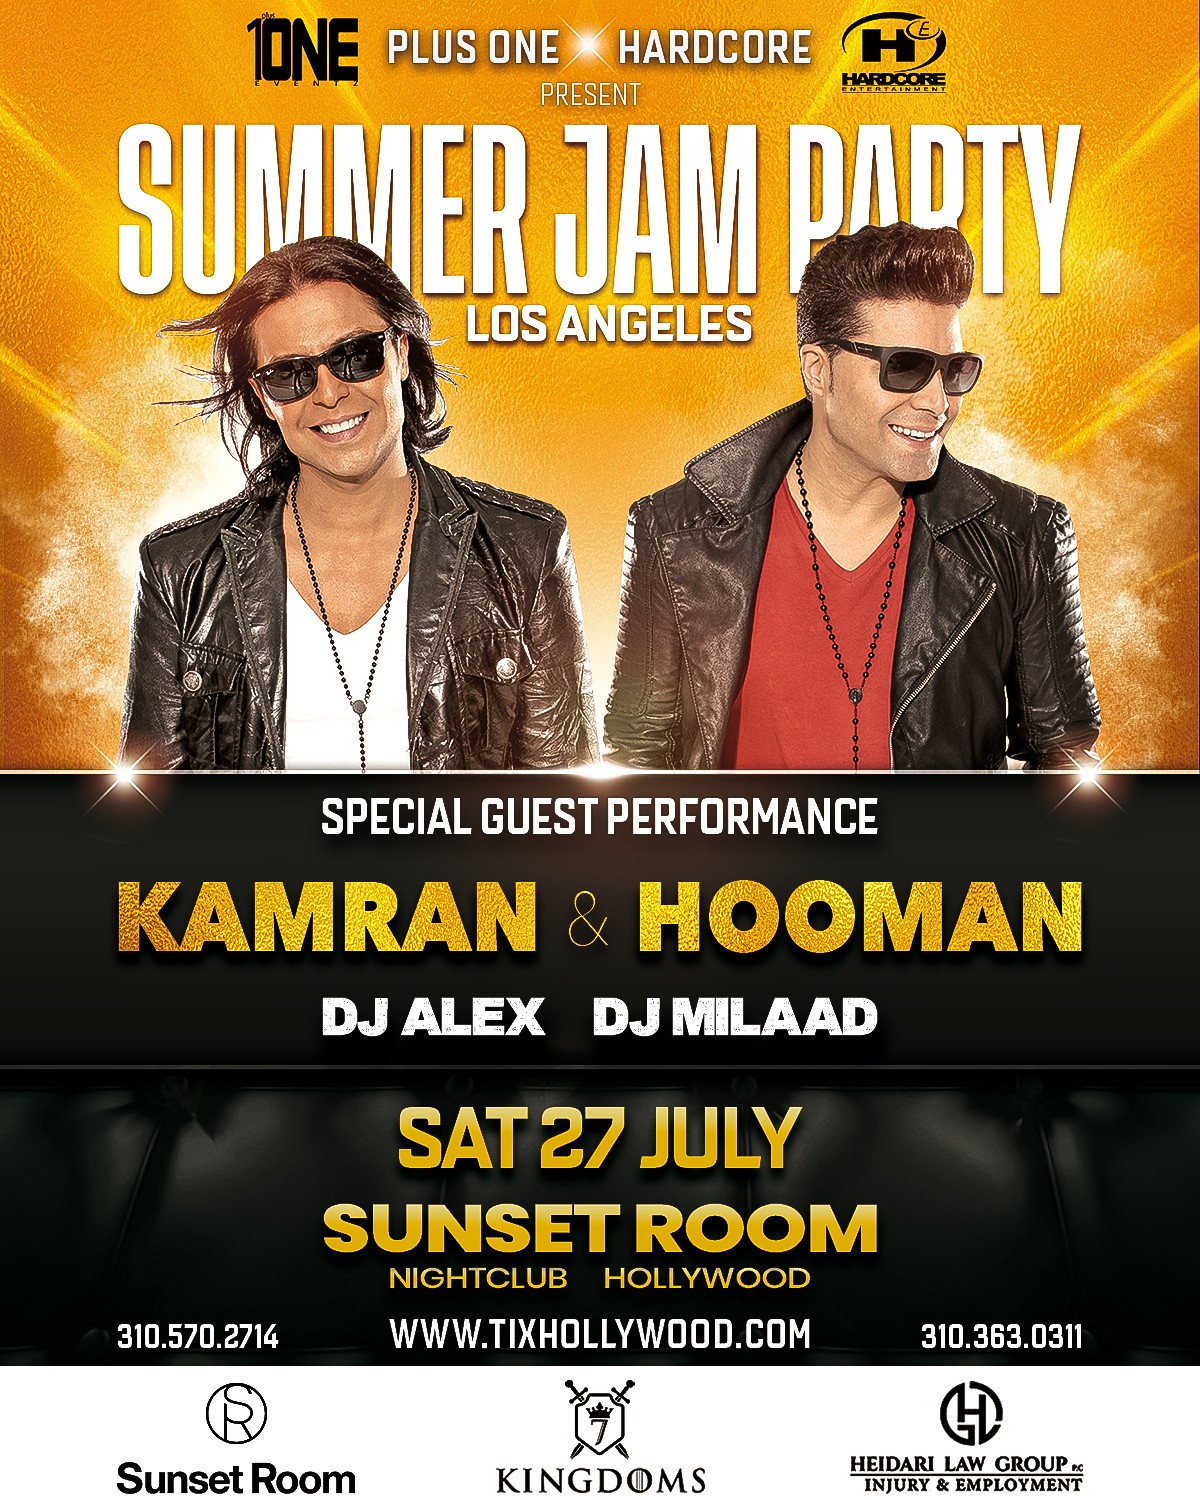 Summer Jam Party feat: KAMRAN & HOOMAN (Special Guest Performance) Saturday, July 27th @ Sunset Room Hollywood on jul. 27, 22:00@Sunset Room - Compra entradas y obtén información enHARDCORE & PLUS ONE tixhollywood.com